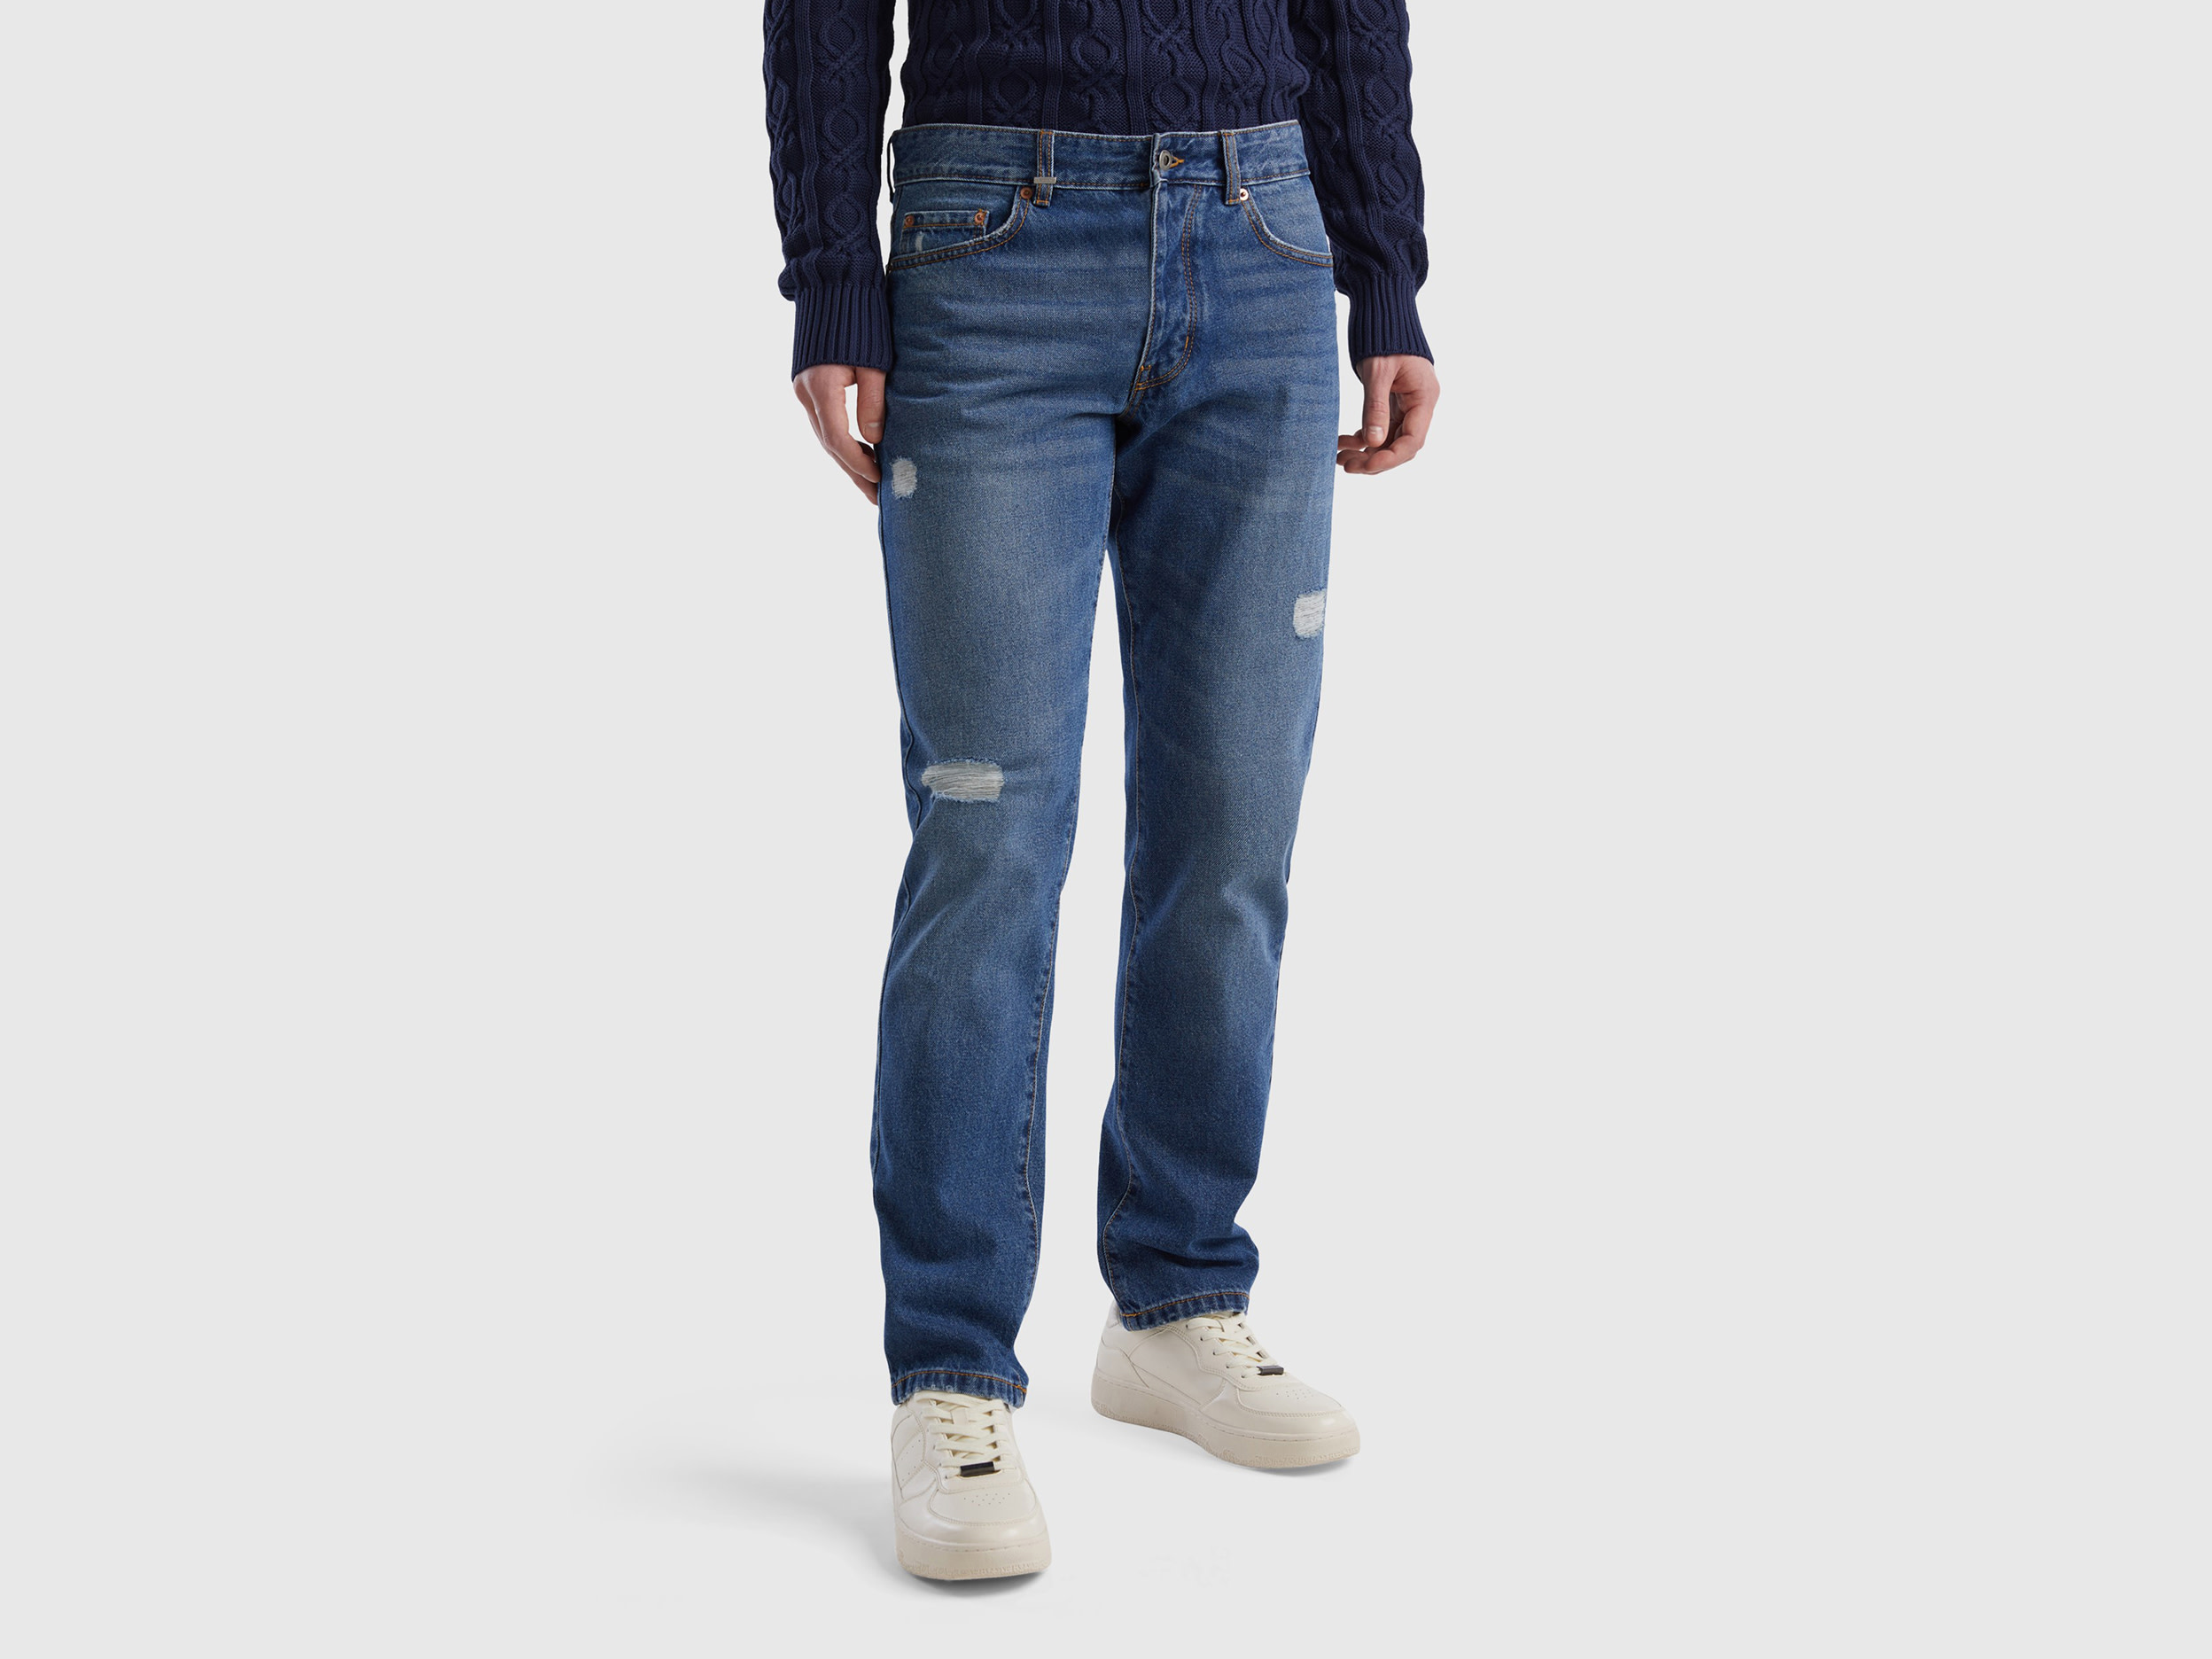 Benetton, Straight Fit Jeans, size 33, Light Blue, Men